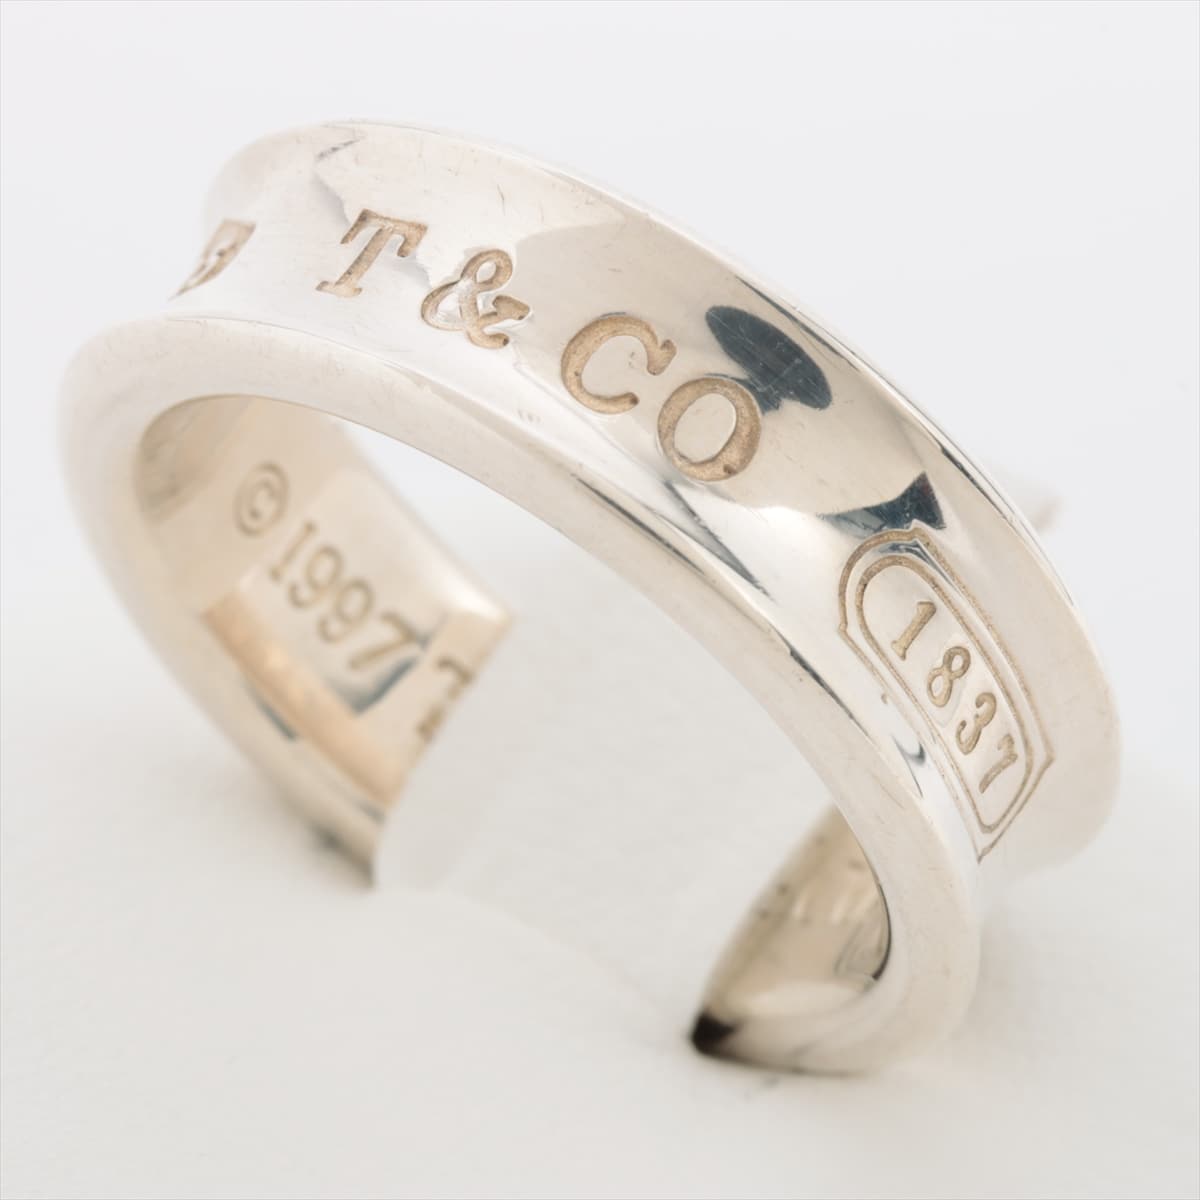 Tiffany 1837 Narrow rings 925 8.6g Silver